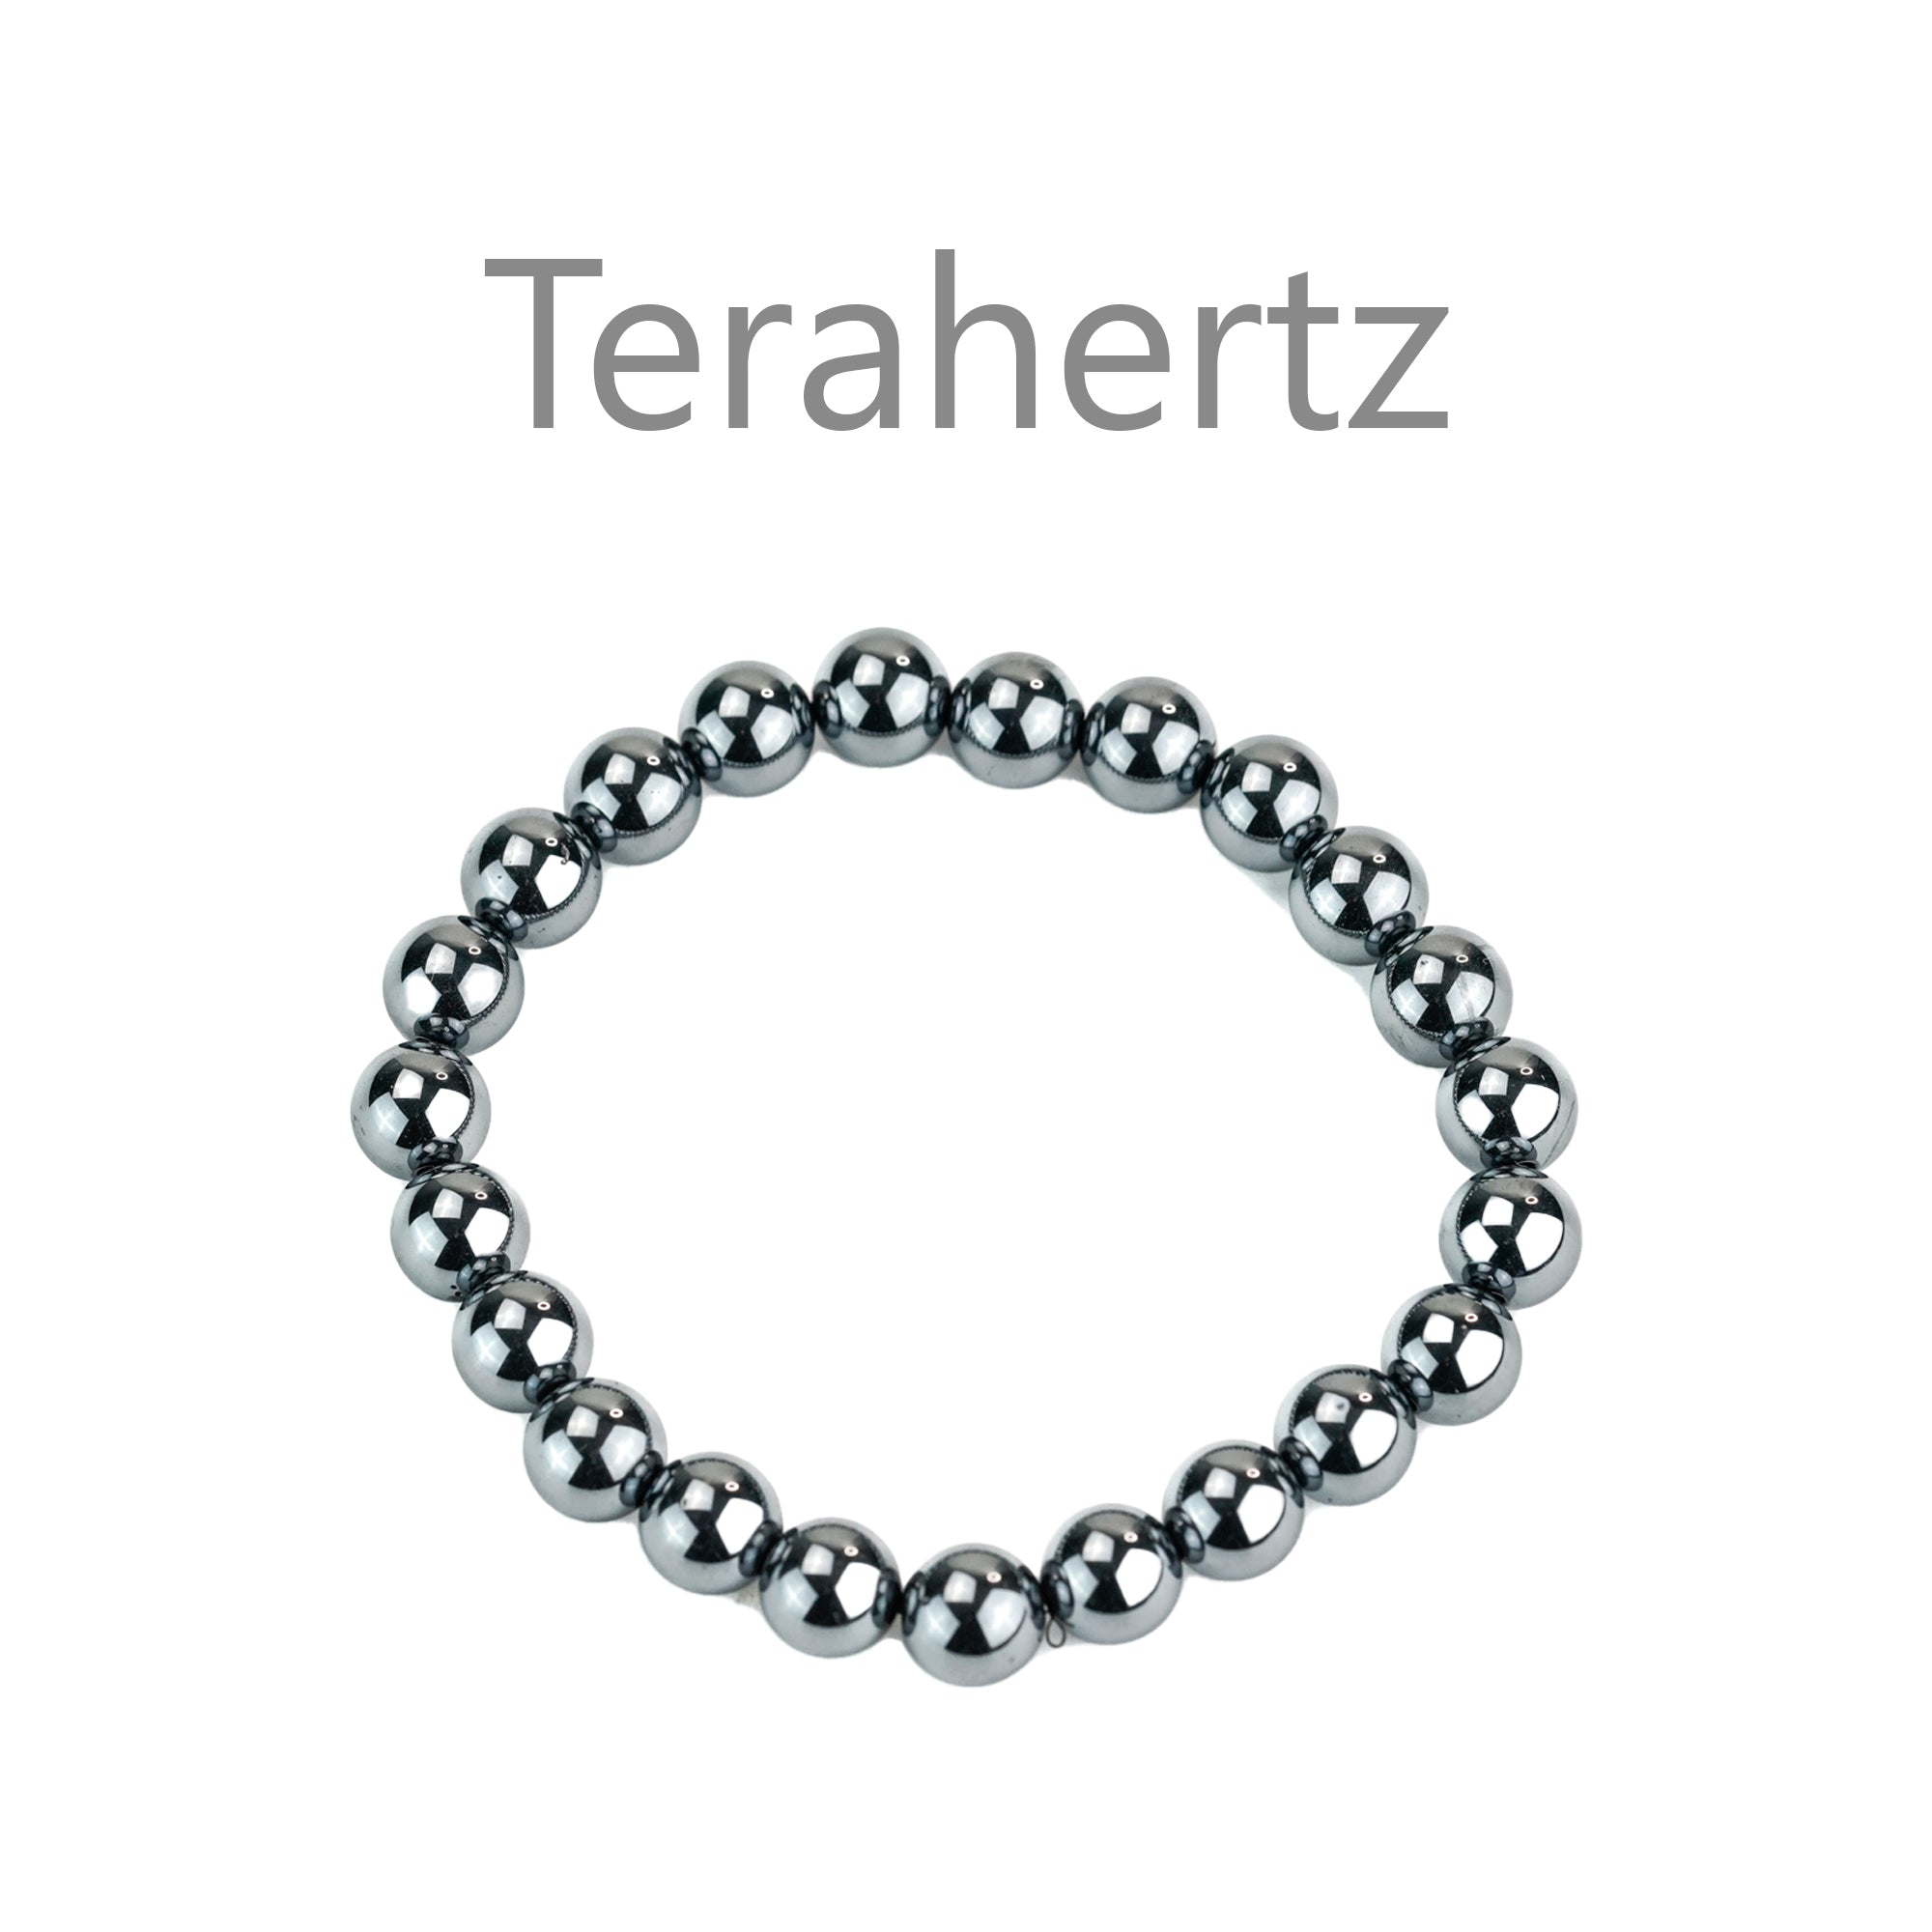 terahertz